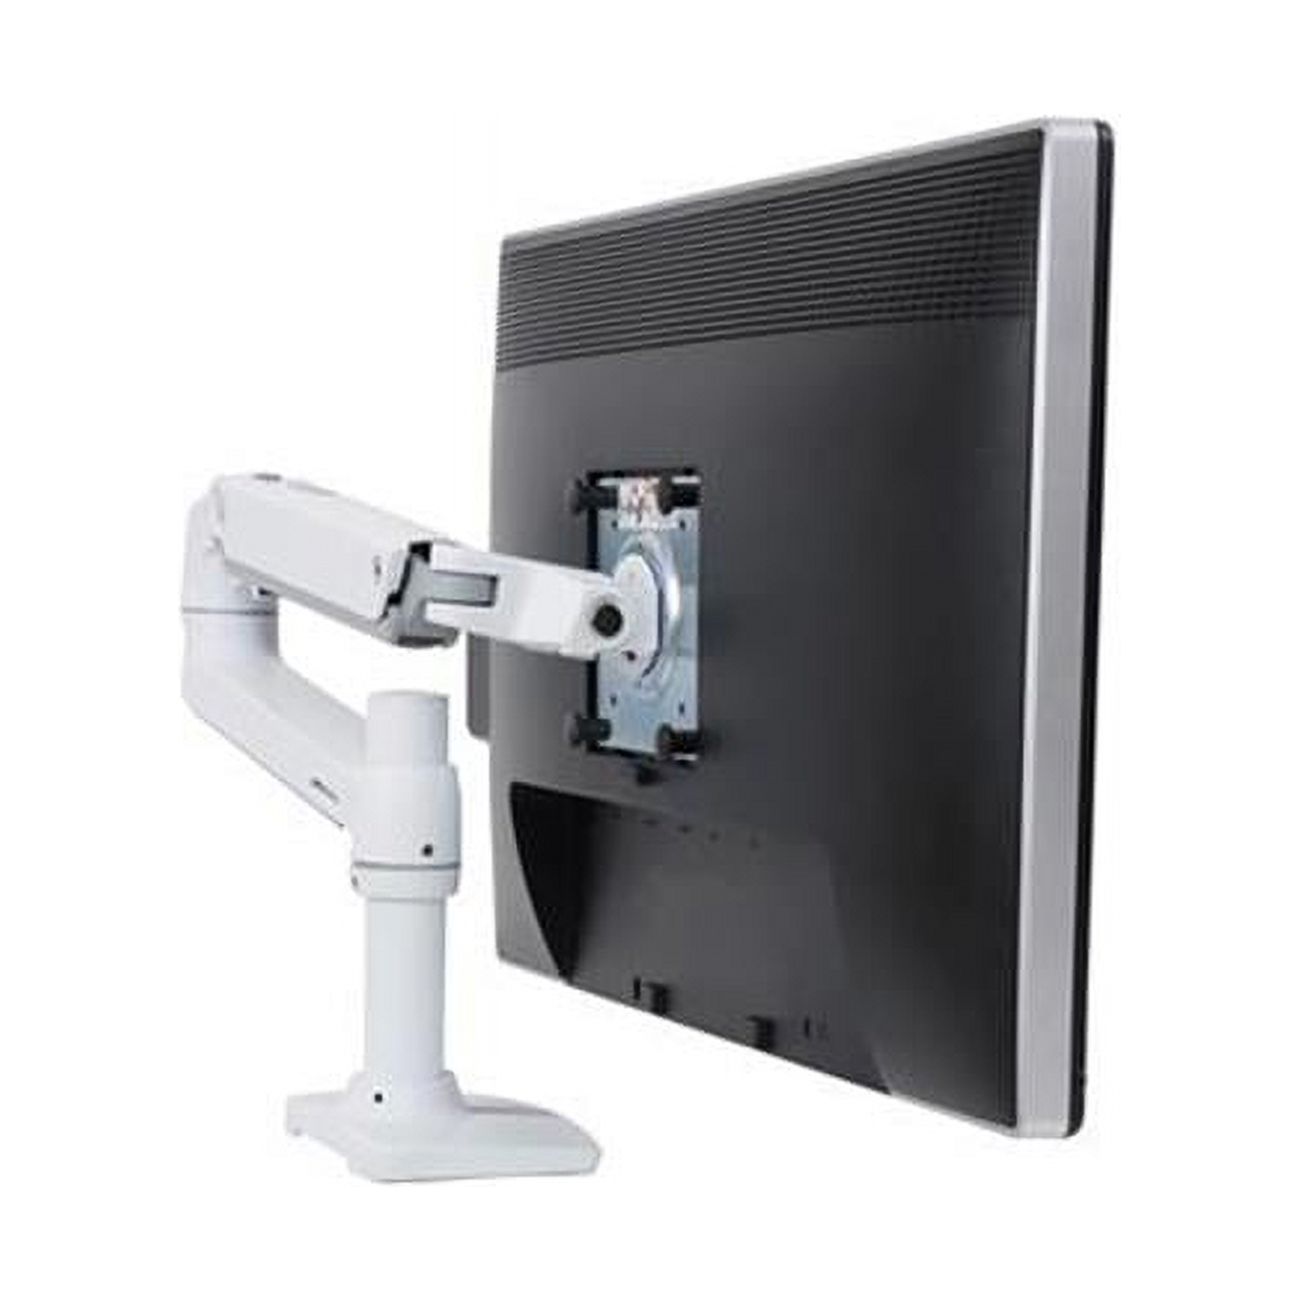 Ergotron Mounting Arm for Monitor, White - image 1 of 5